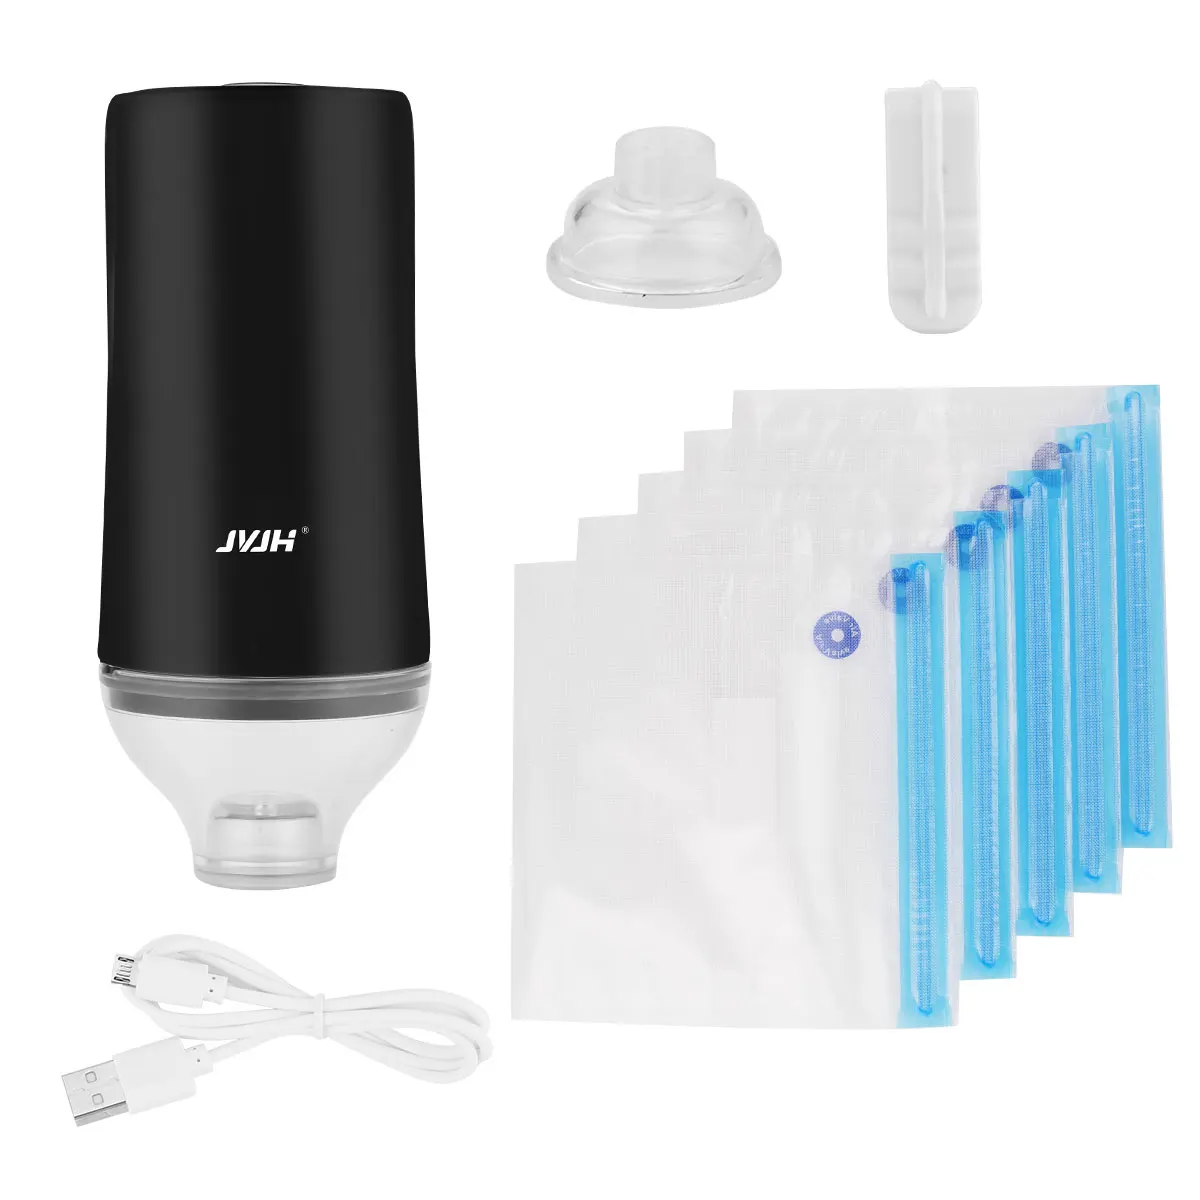 

JVJH Handheld Food Vacuum Sealer with 5Pcs Reusable Food Saver Storage bags Handy Vacuum Sealing Machine for Food Preservation